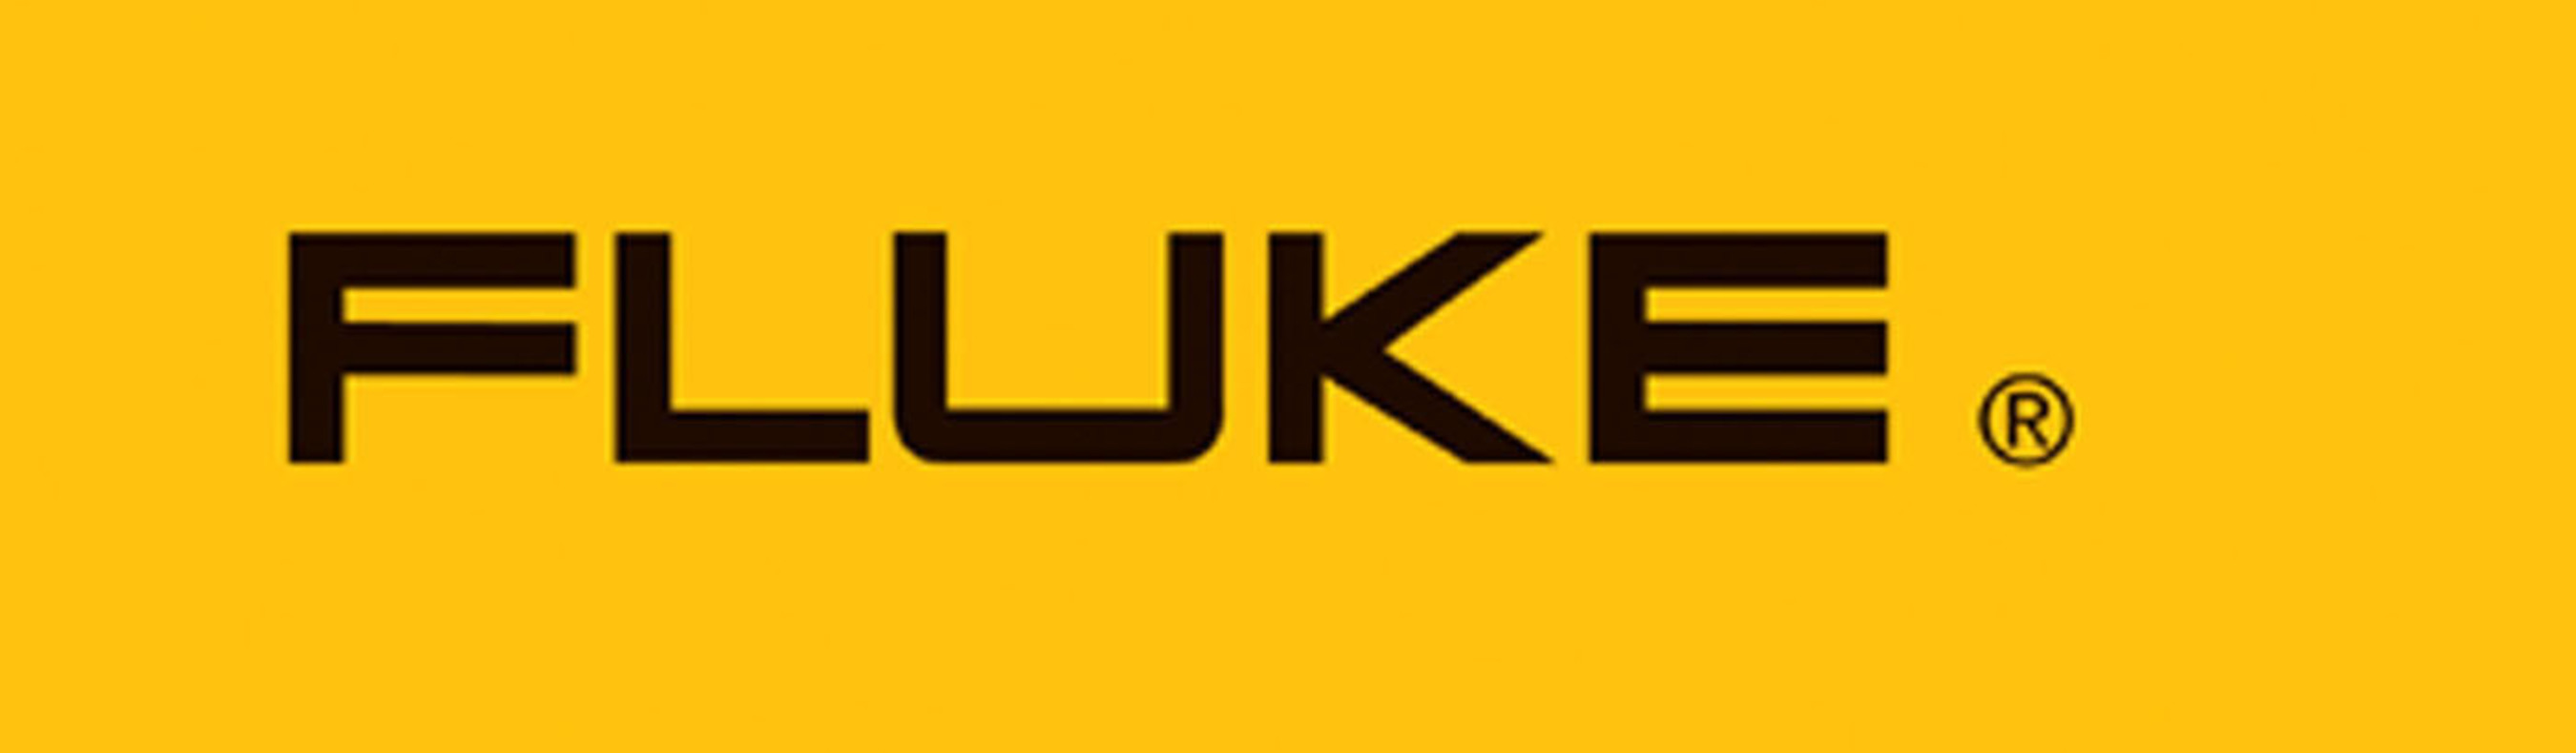 Fluke Corporation.